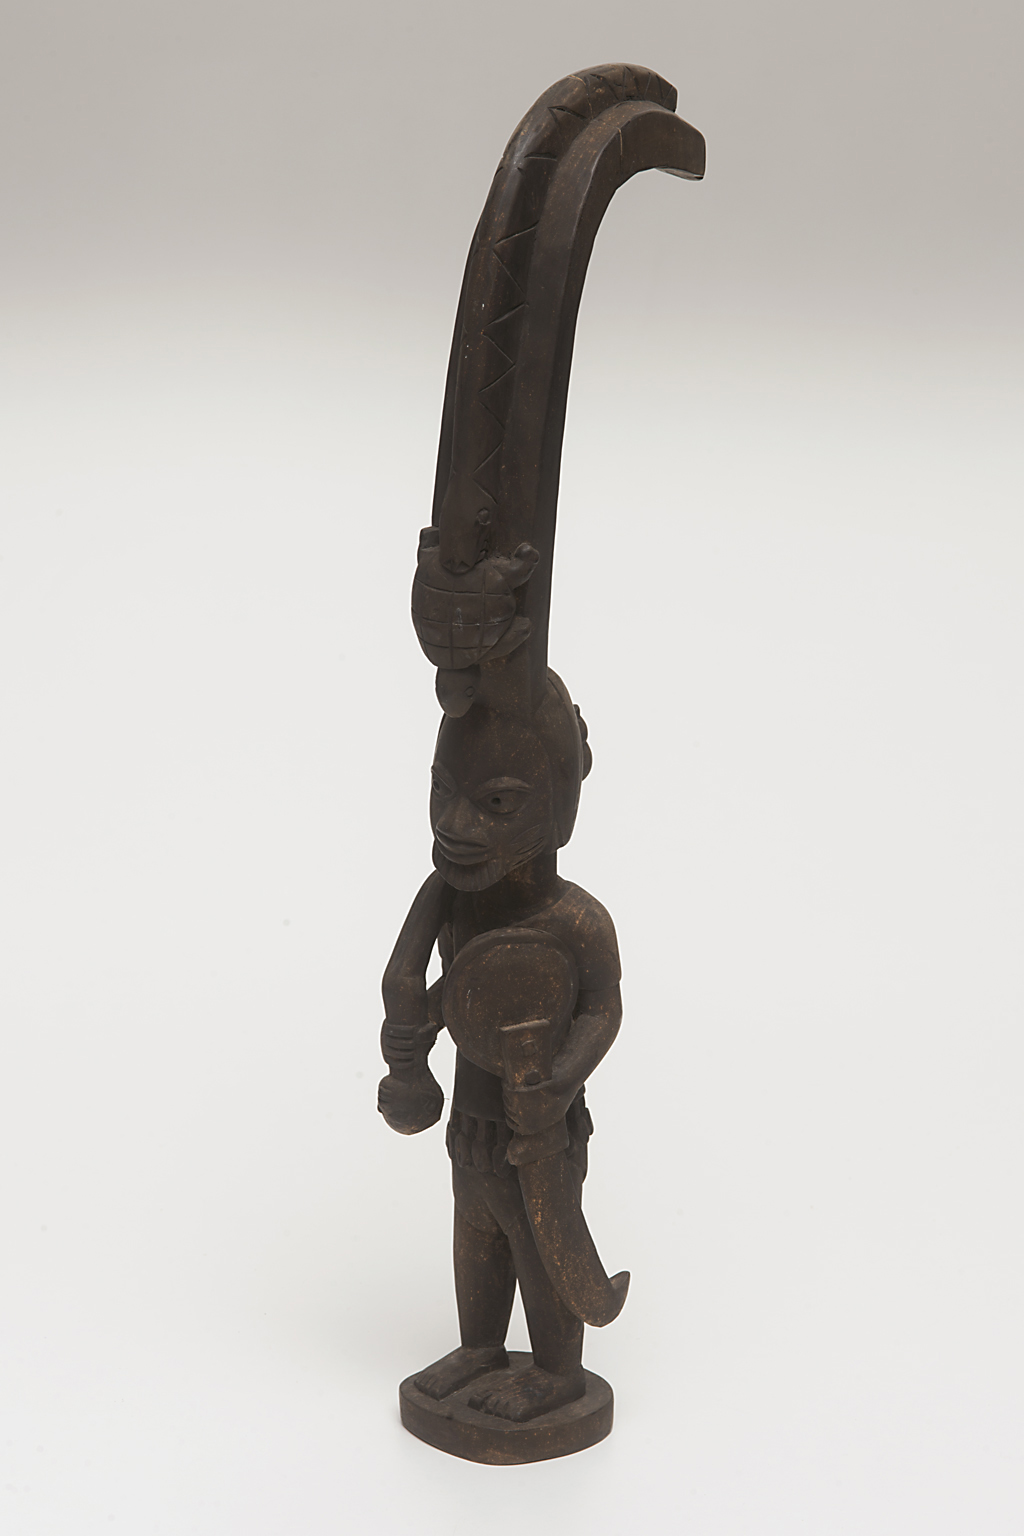 standing figure, identified as Eshu